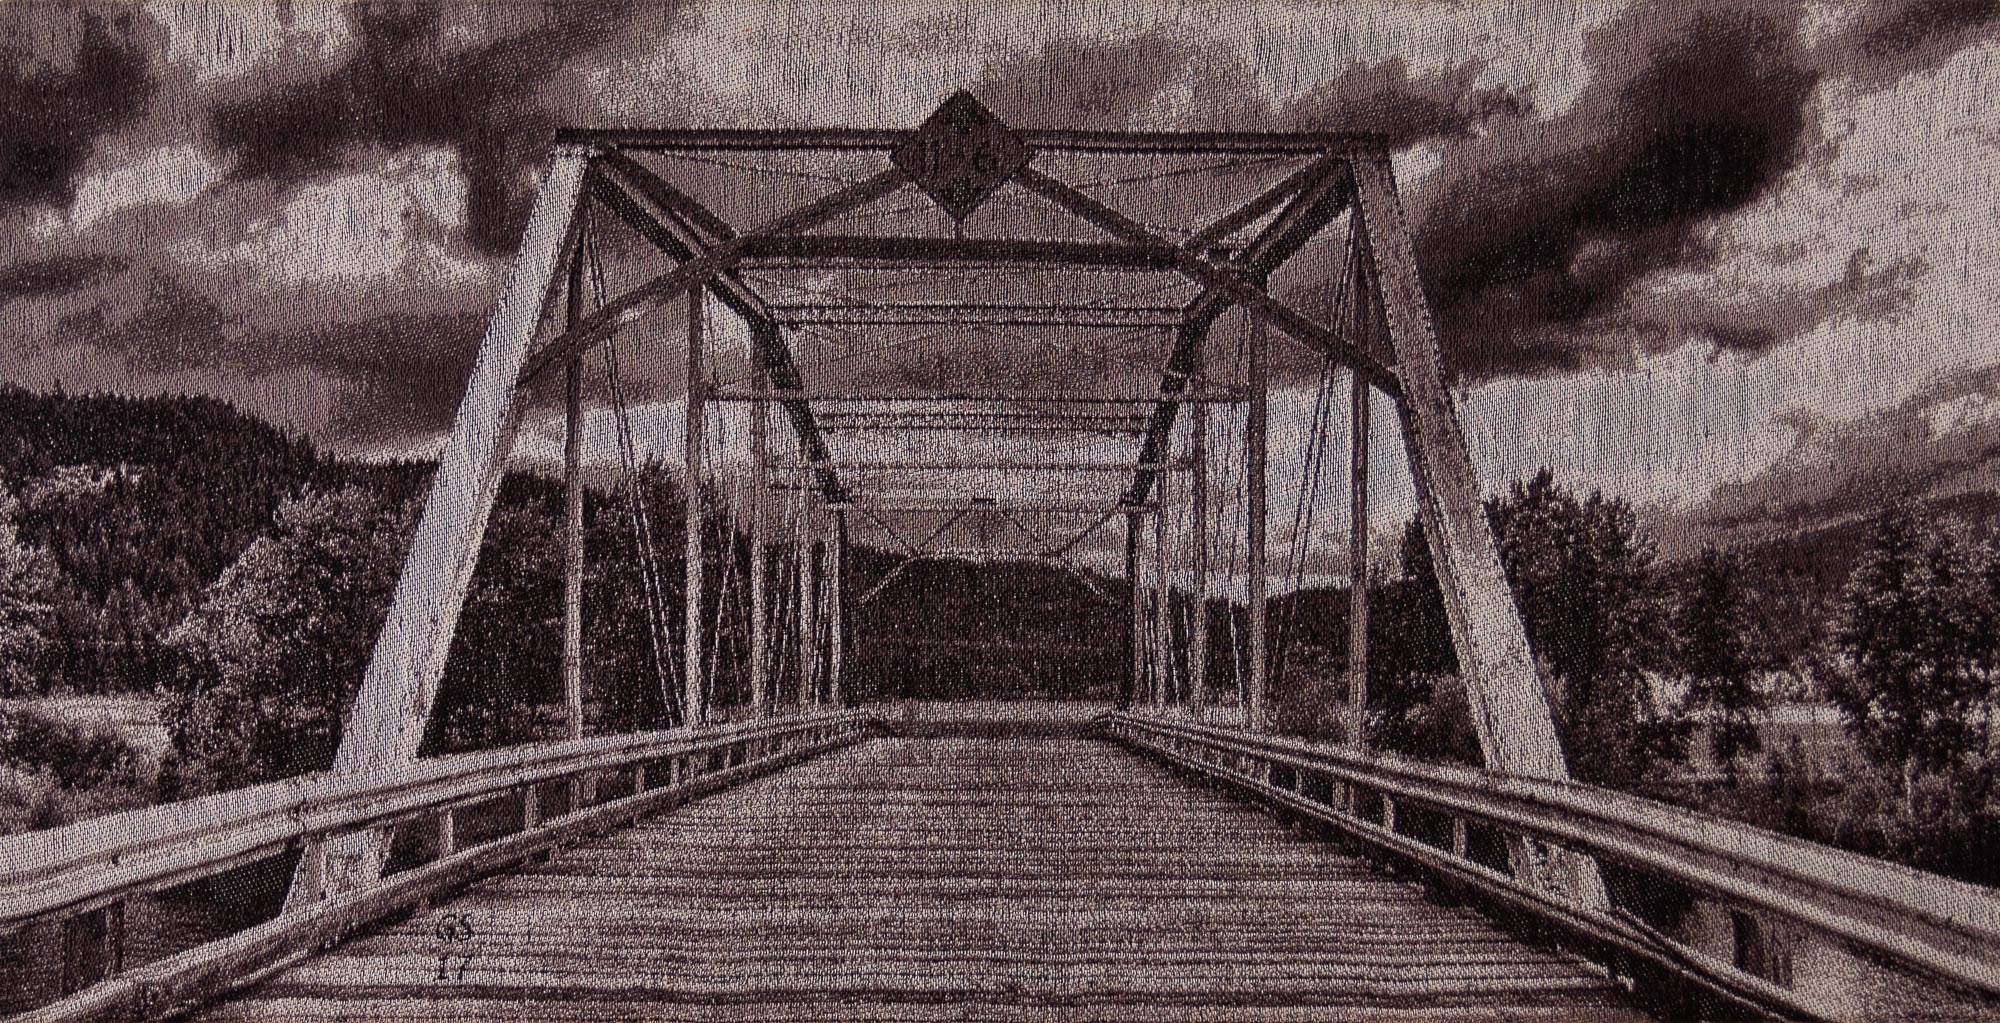 Idaho Bridge